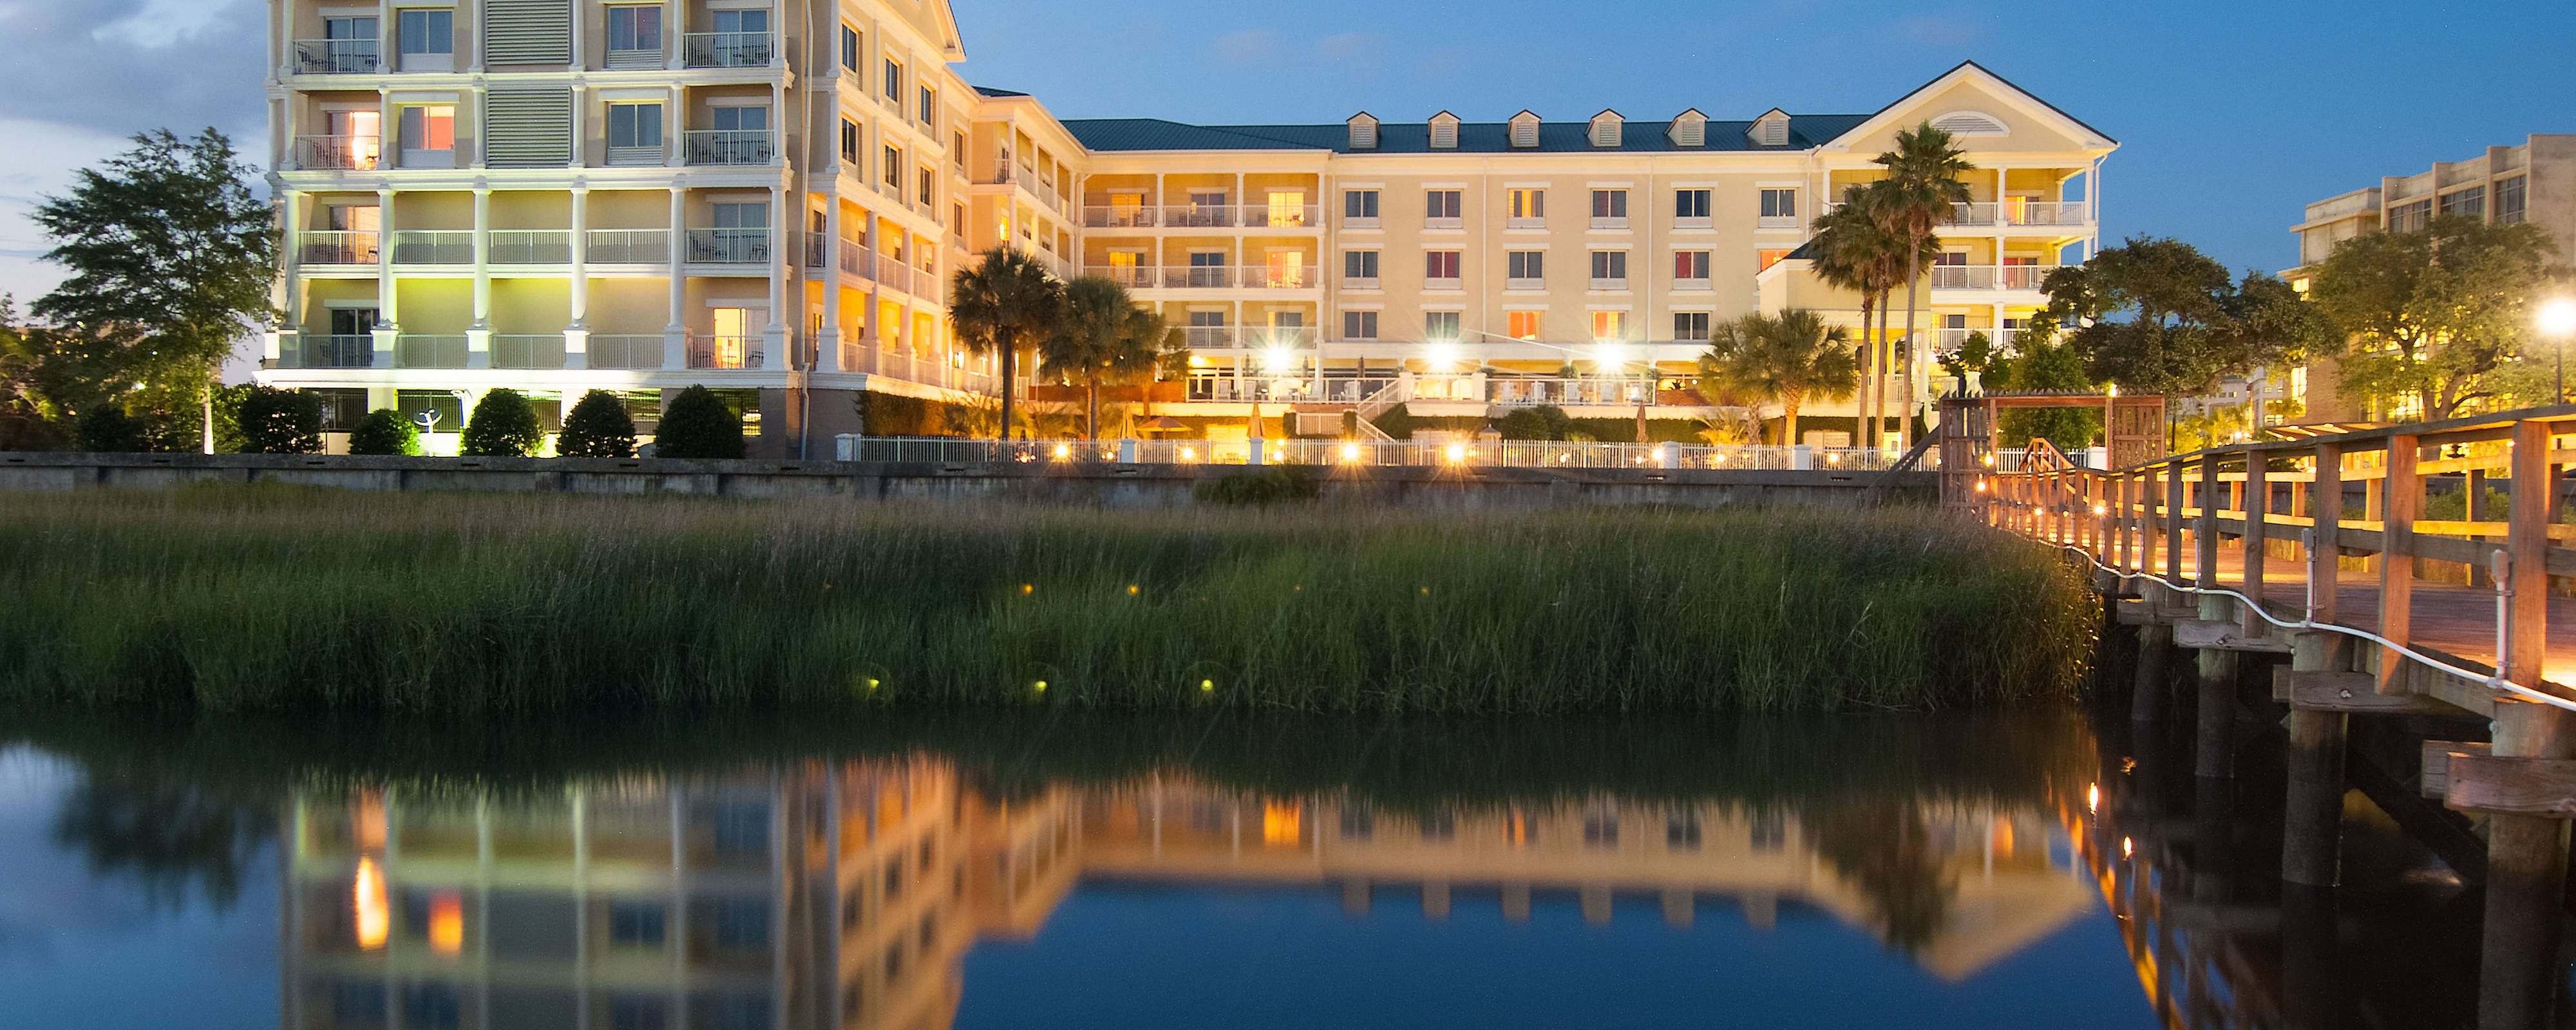 Waterfront Hotel In Charleston Sc Charleston Waterfront Hotel